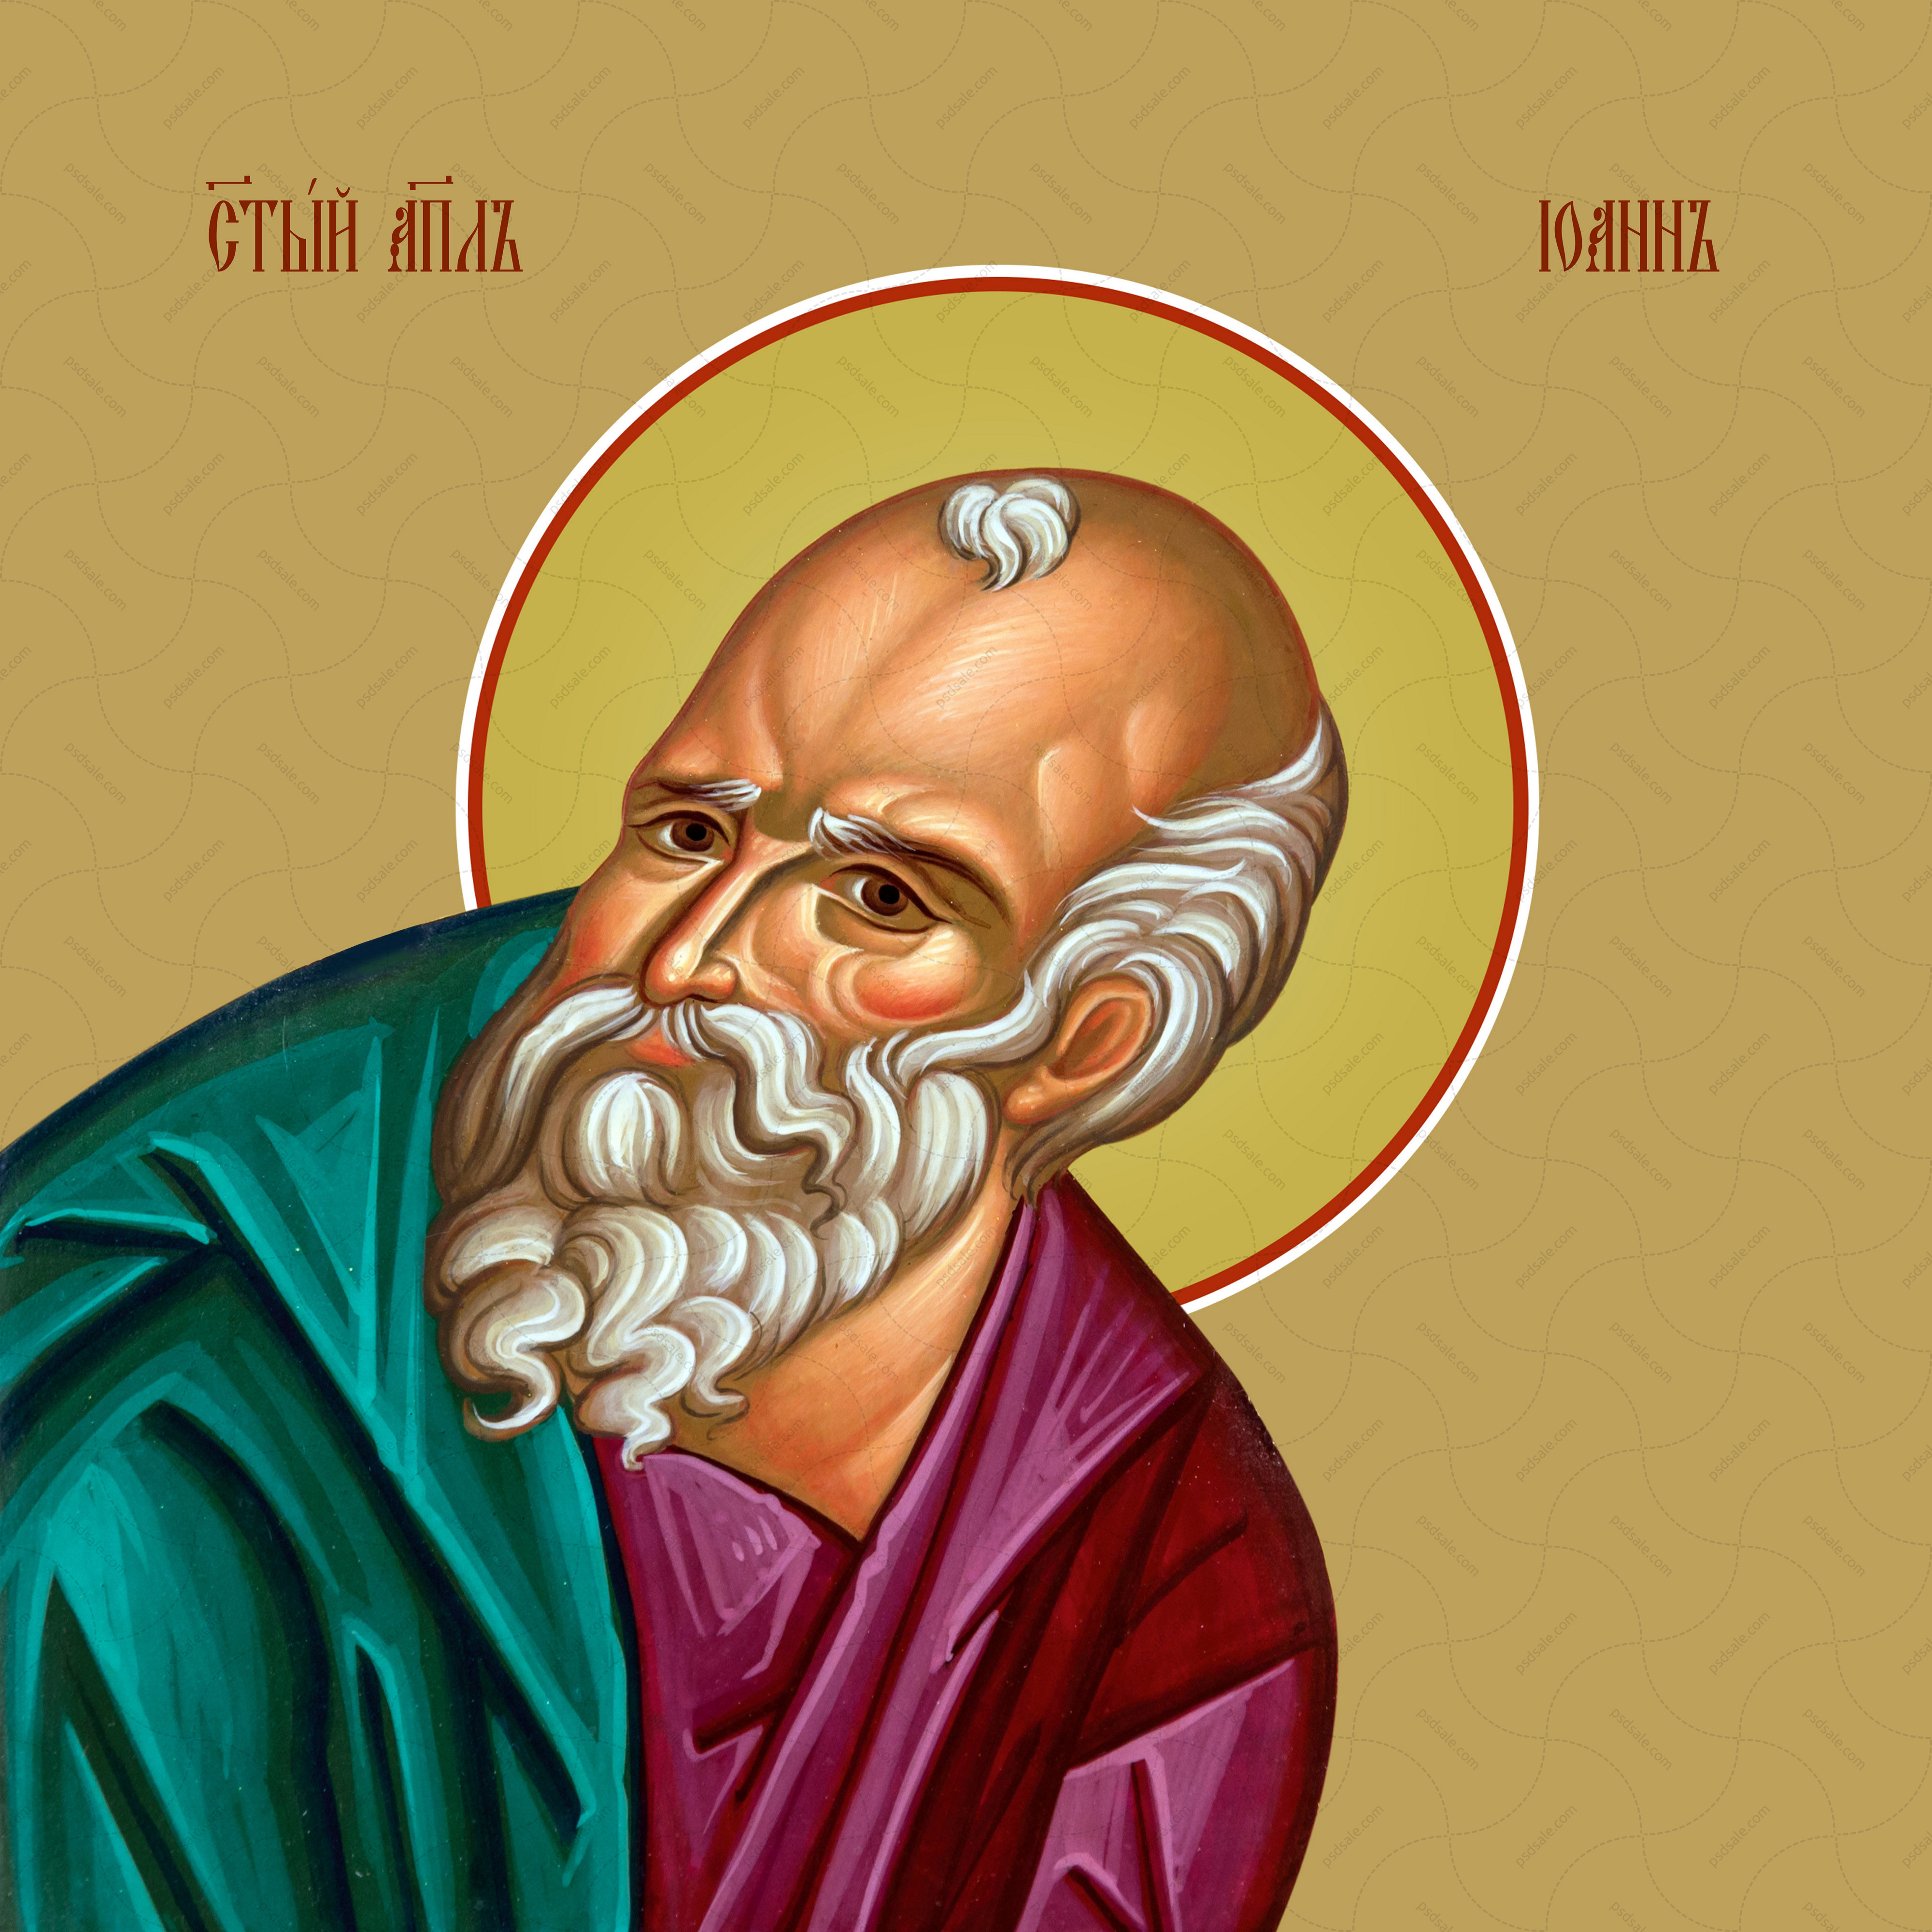 John the Evangelist, apostle